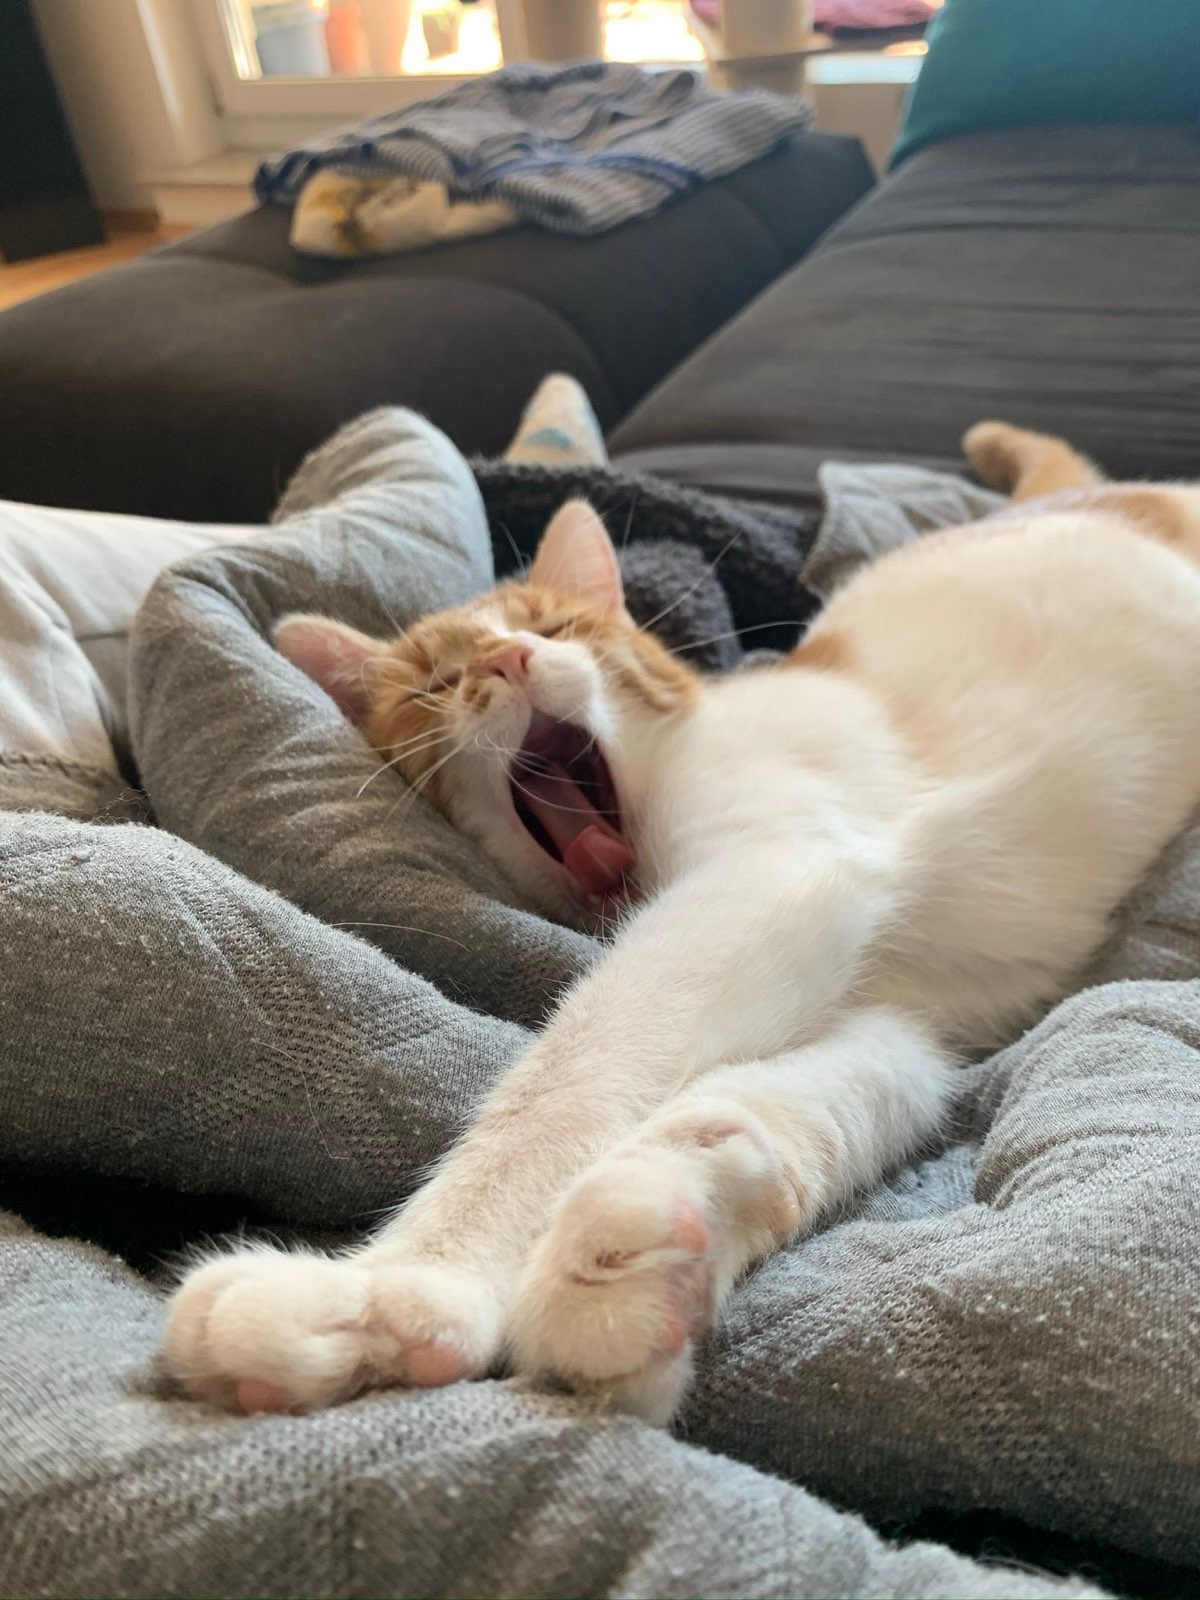 Bojack being beautiful even while yawning